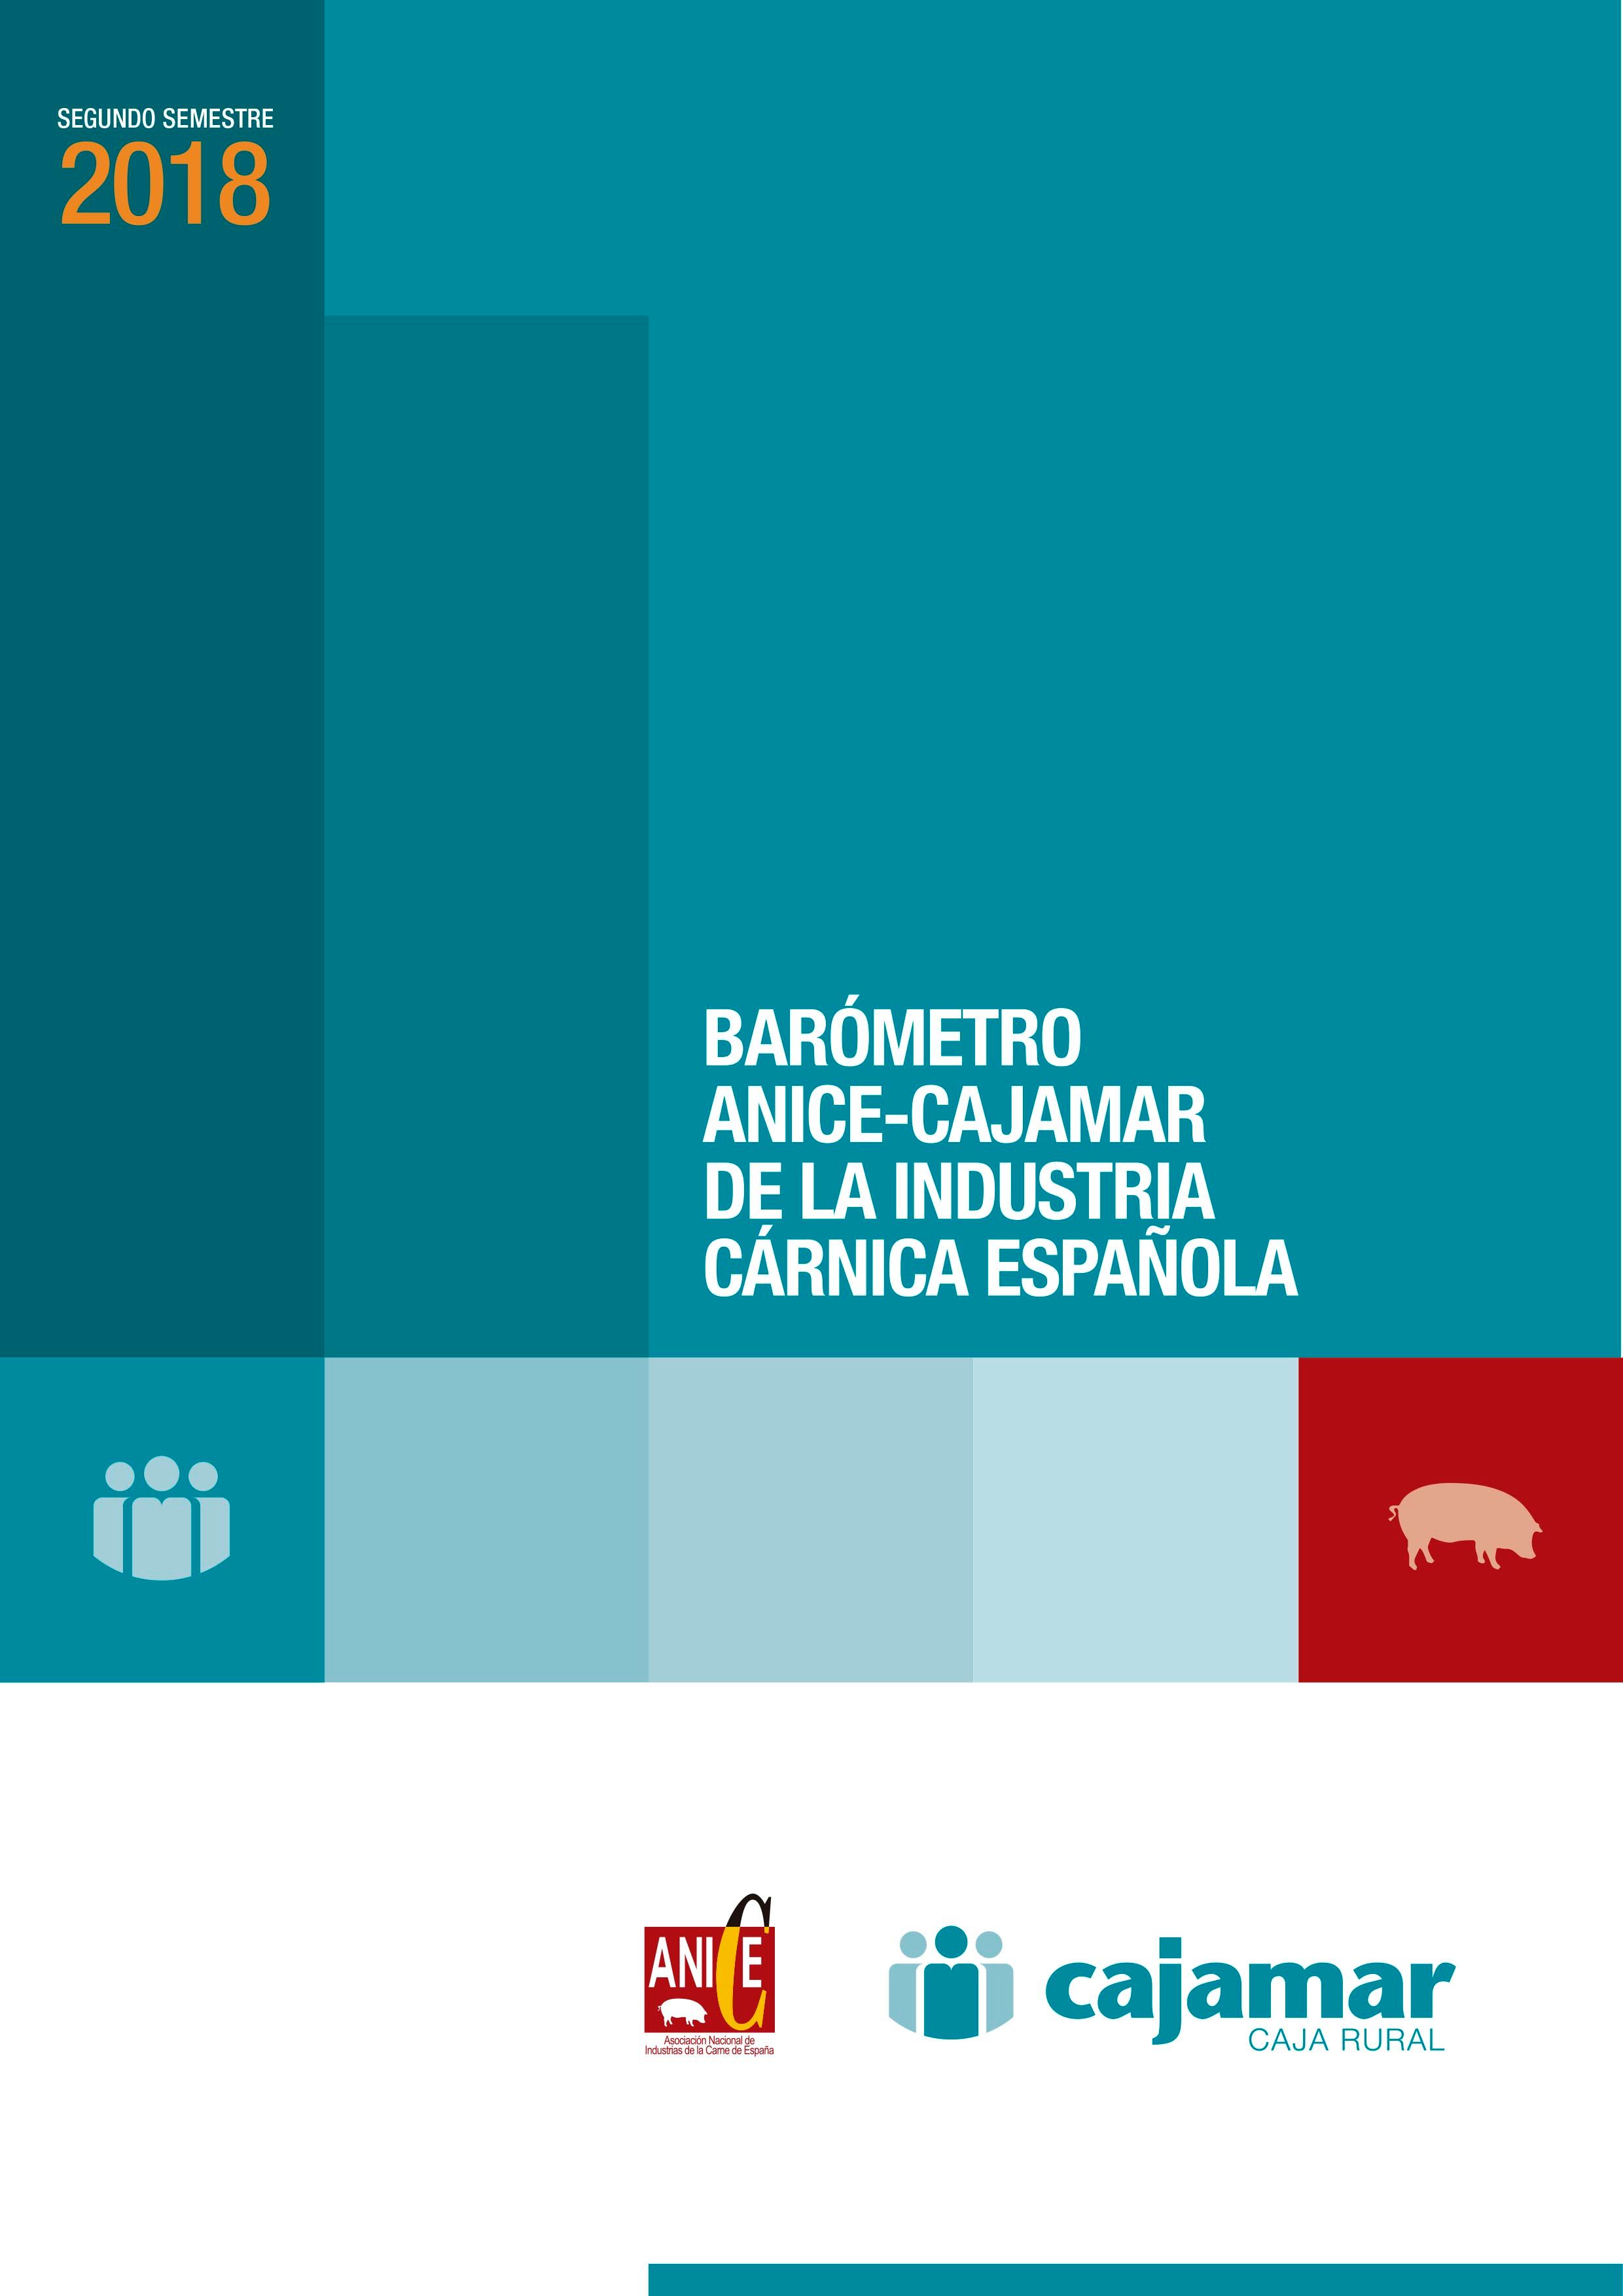 Portada libro "Barómetro ANICE - Cajamar de la industria cárnica española. Segundo semestre 2018" - Plataforma Tierra